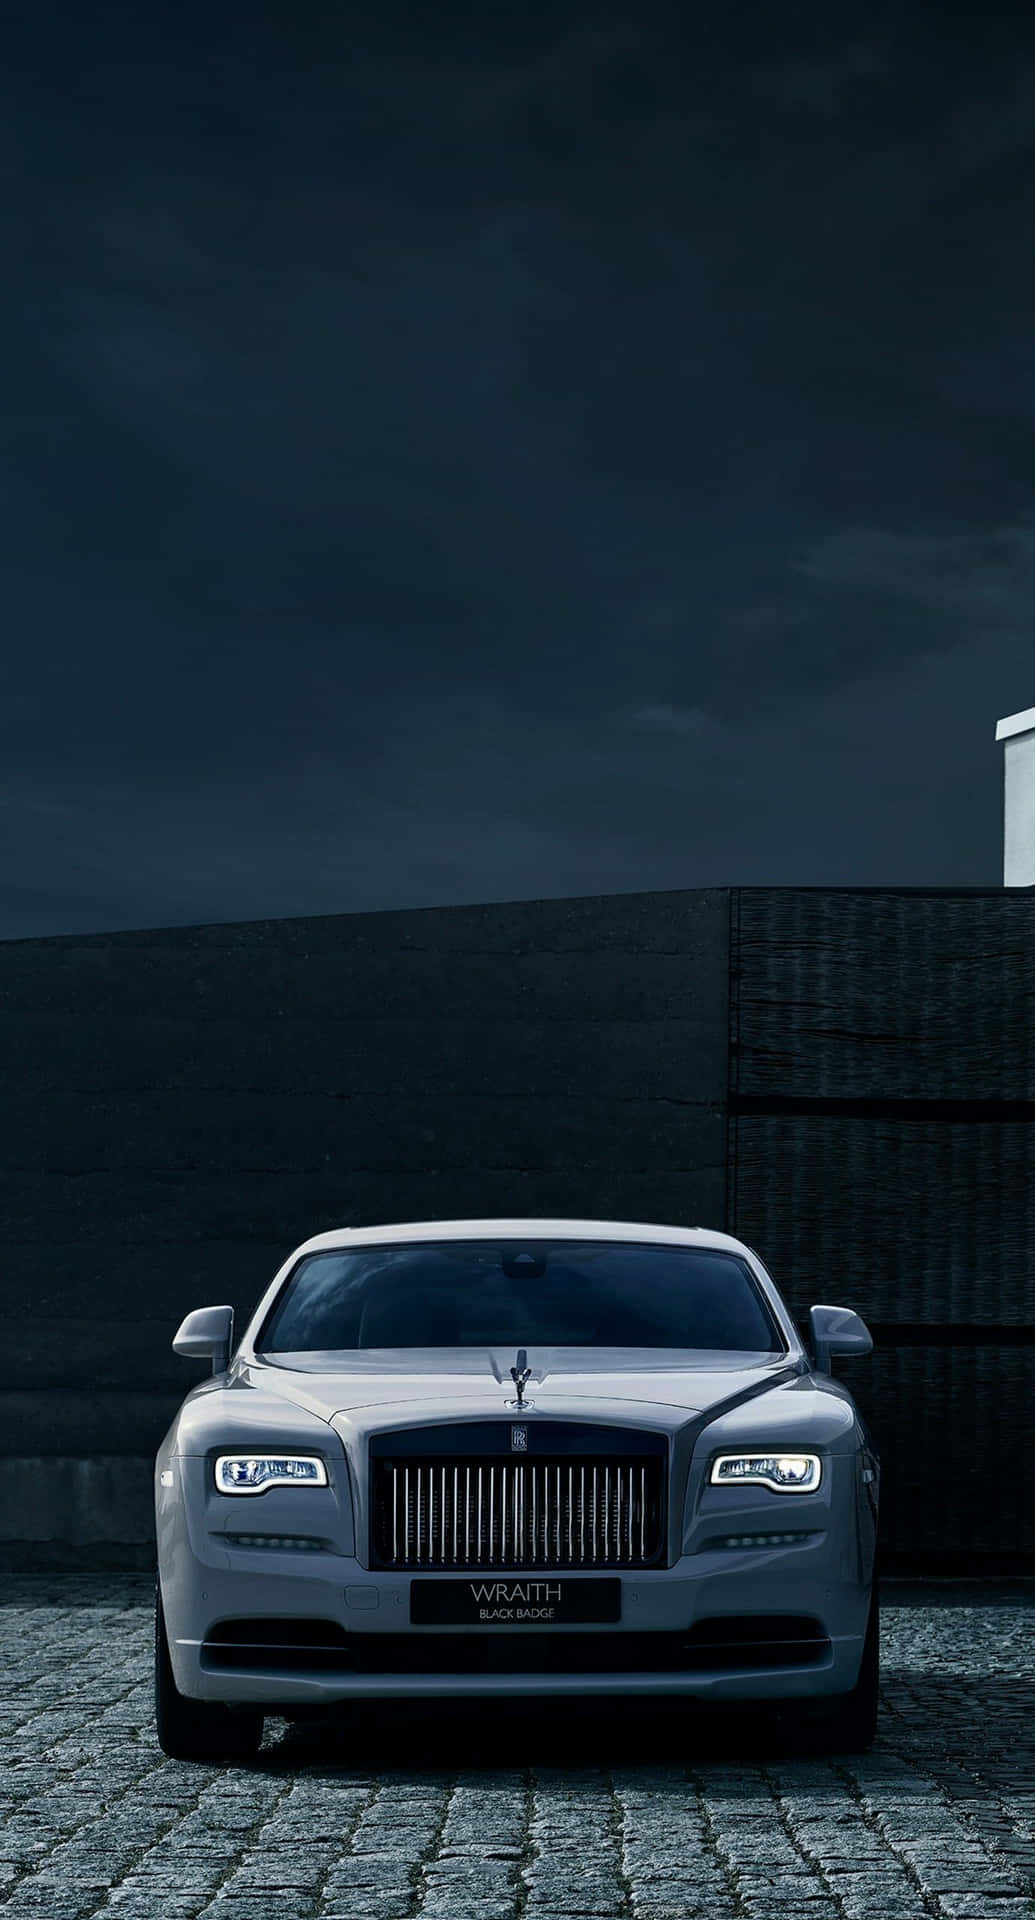 Caption: Majestic Power - The Rolls Royce Engine